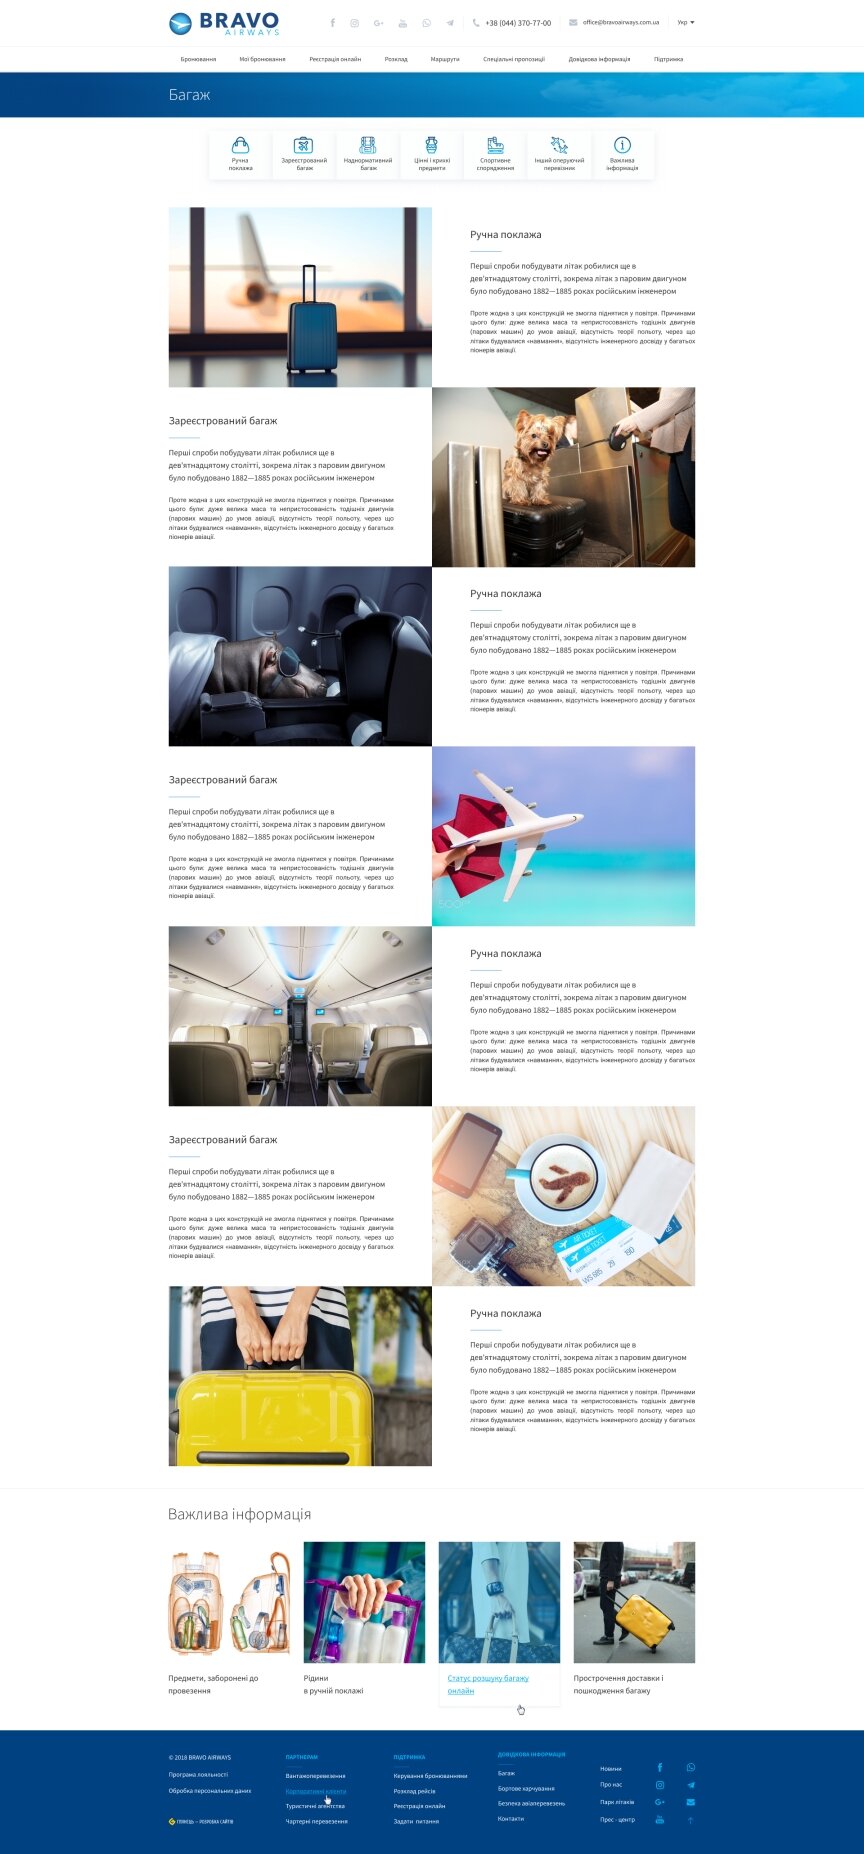 interior page design on the topic Tourism — Airline Bravoairways website 4